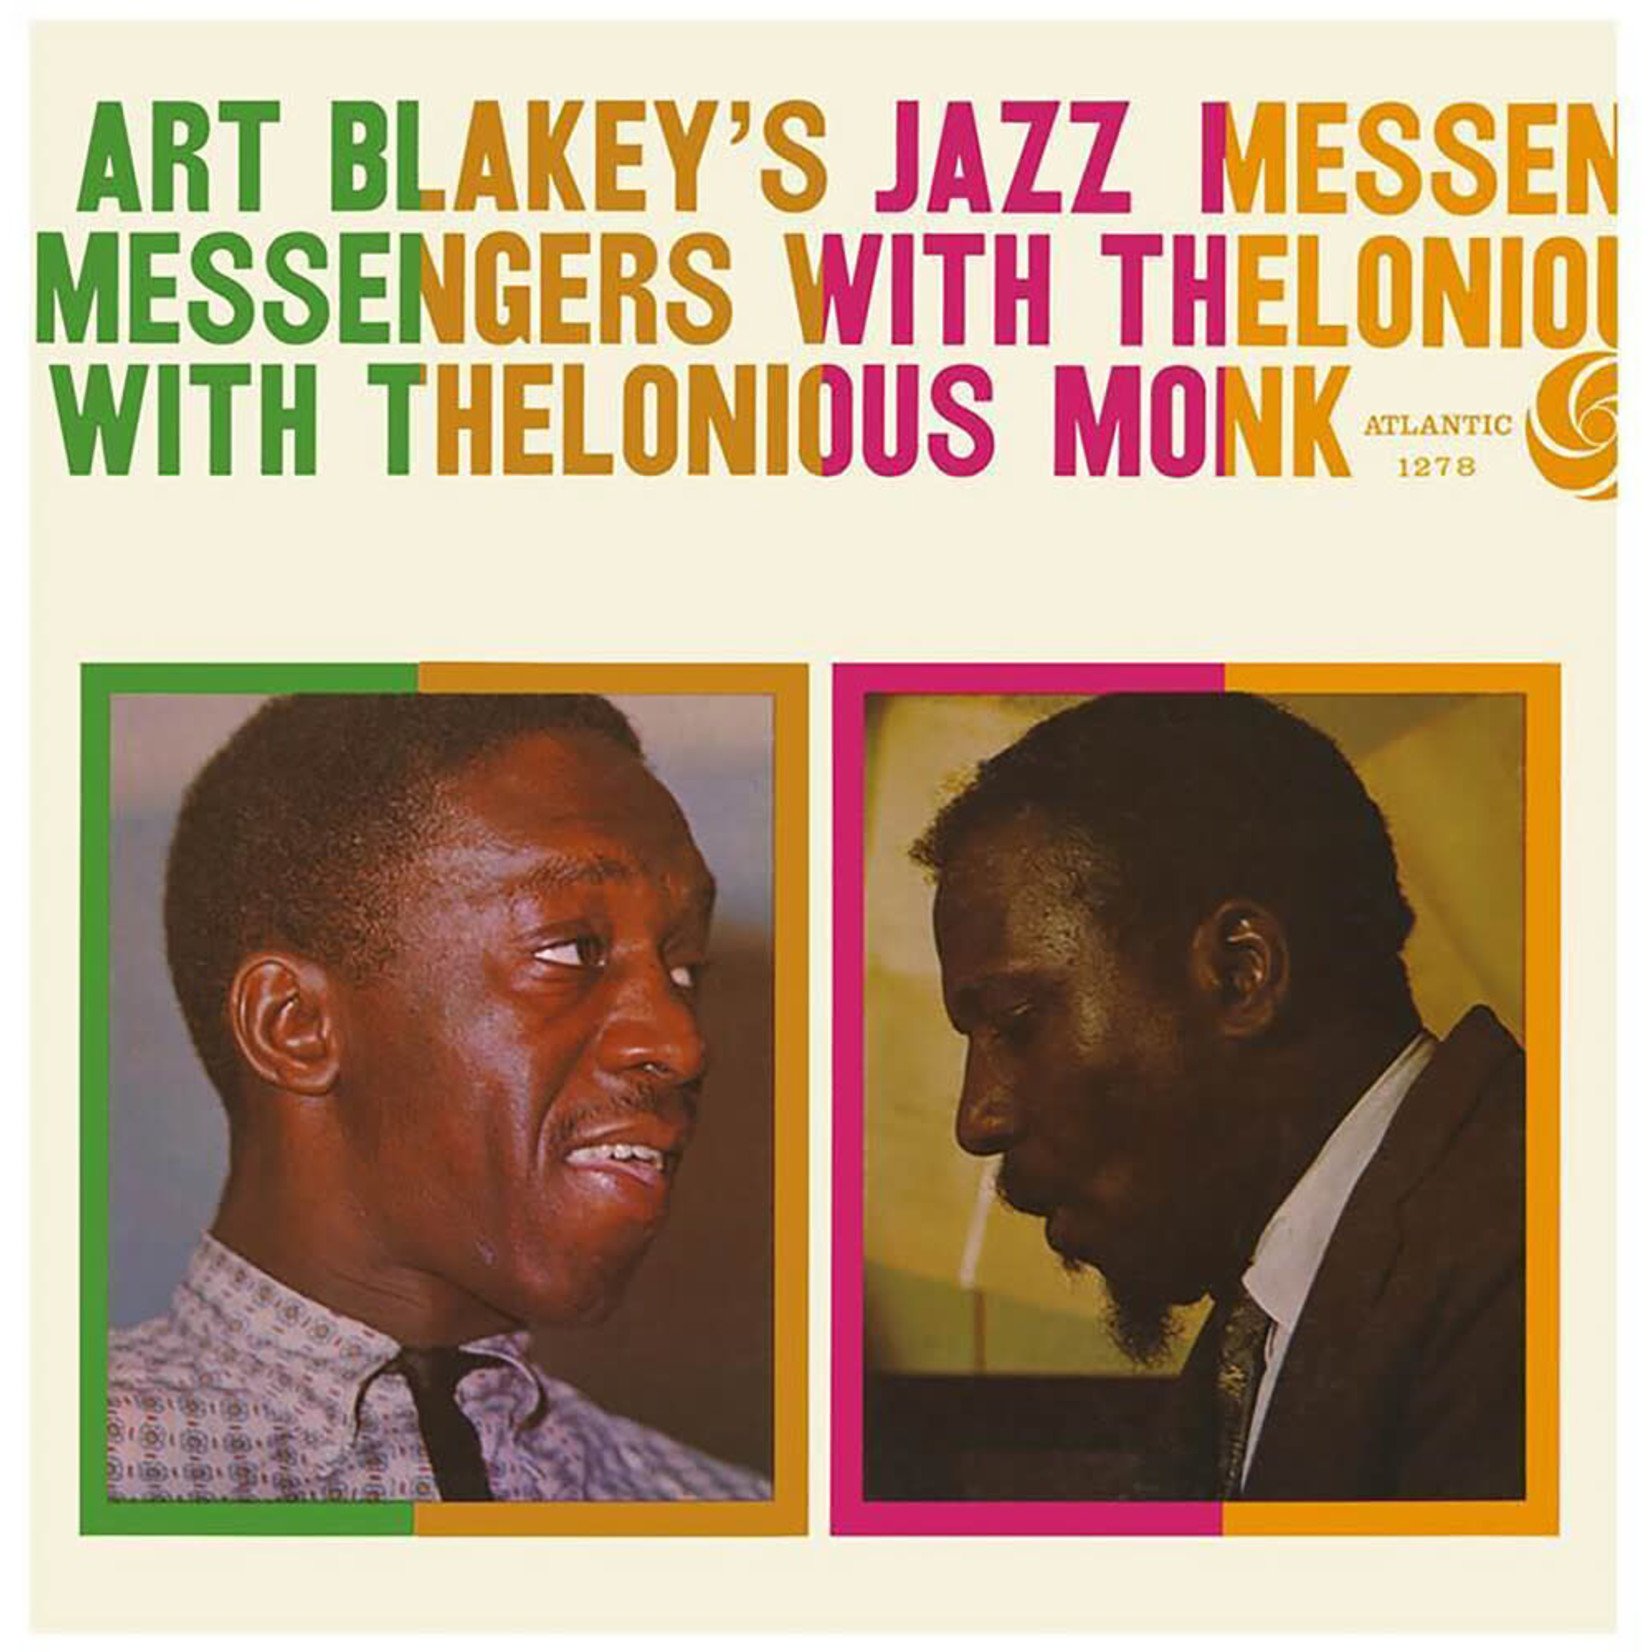 [New] Art Blakey & His Jazz Messengers - Art Blakey's Jazz Messengers w/Thelonious Monk (2LP, deluxe edition, remastered)